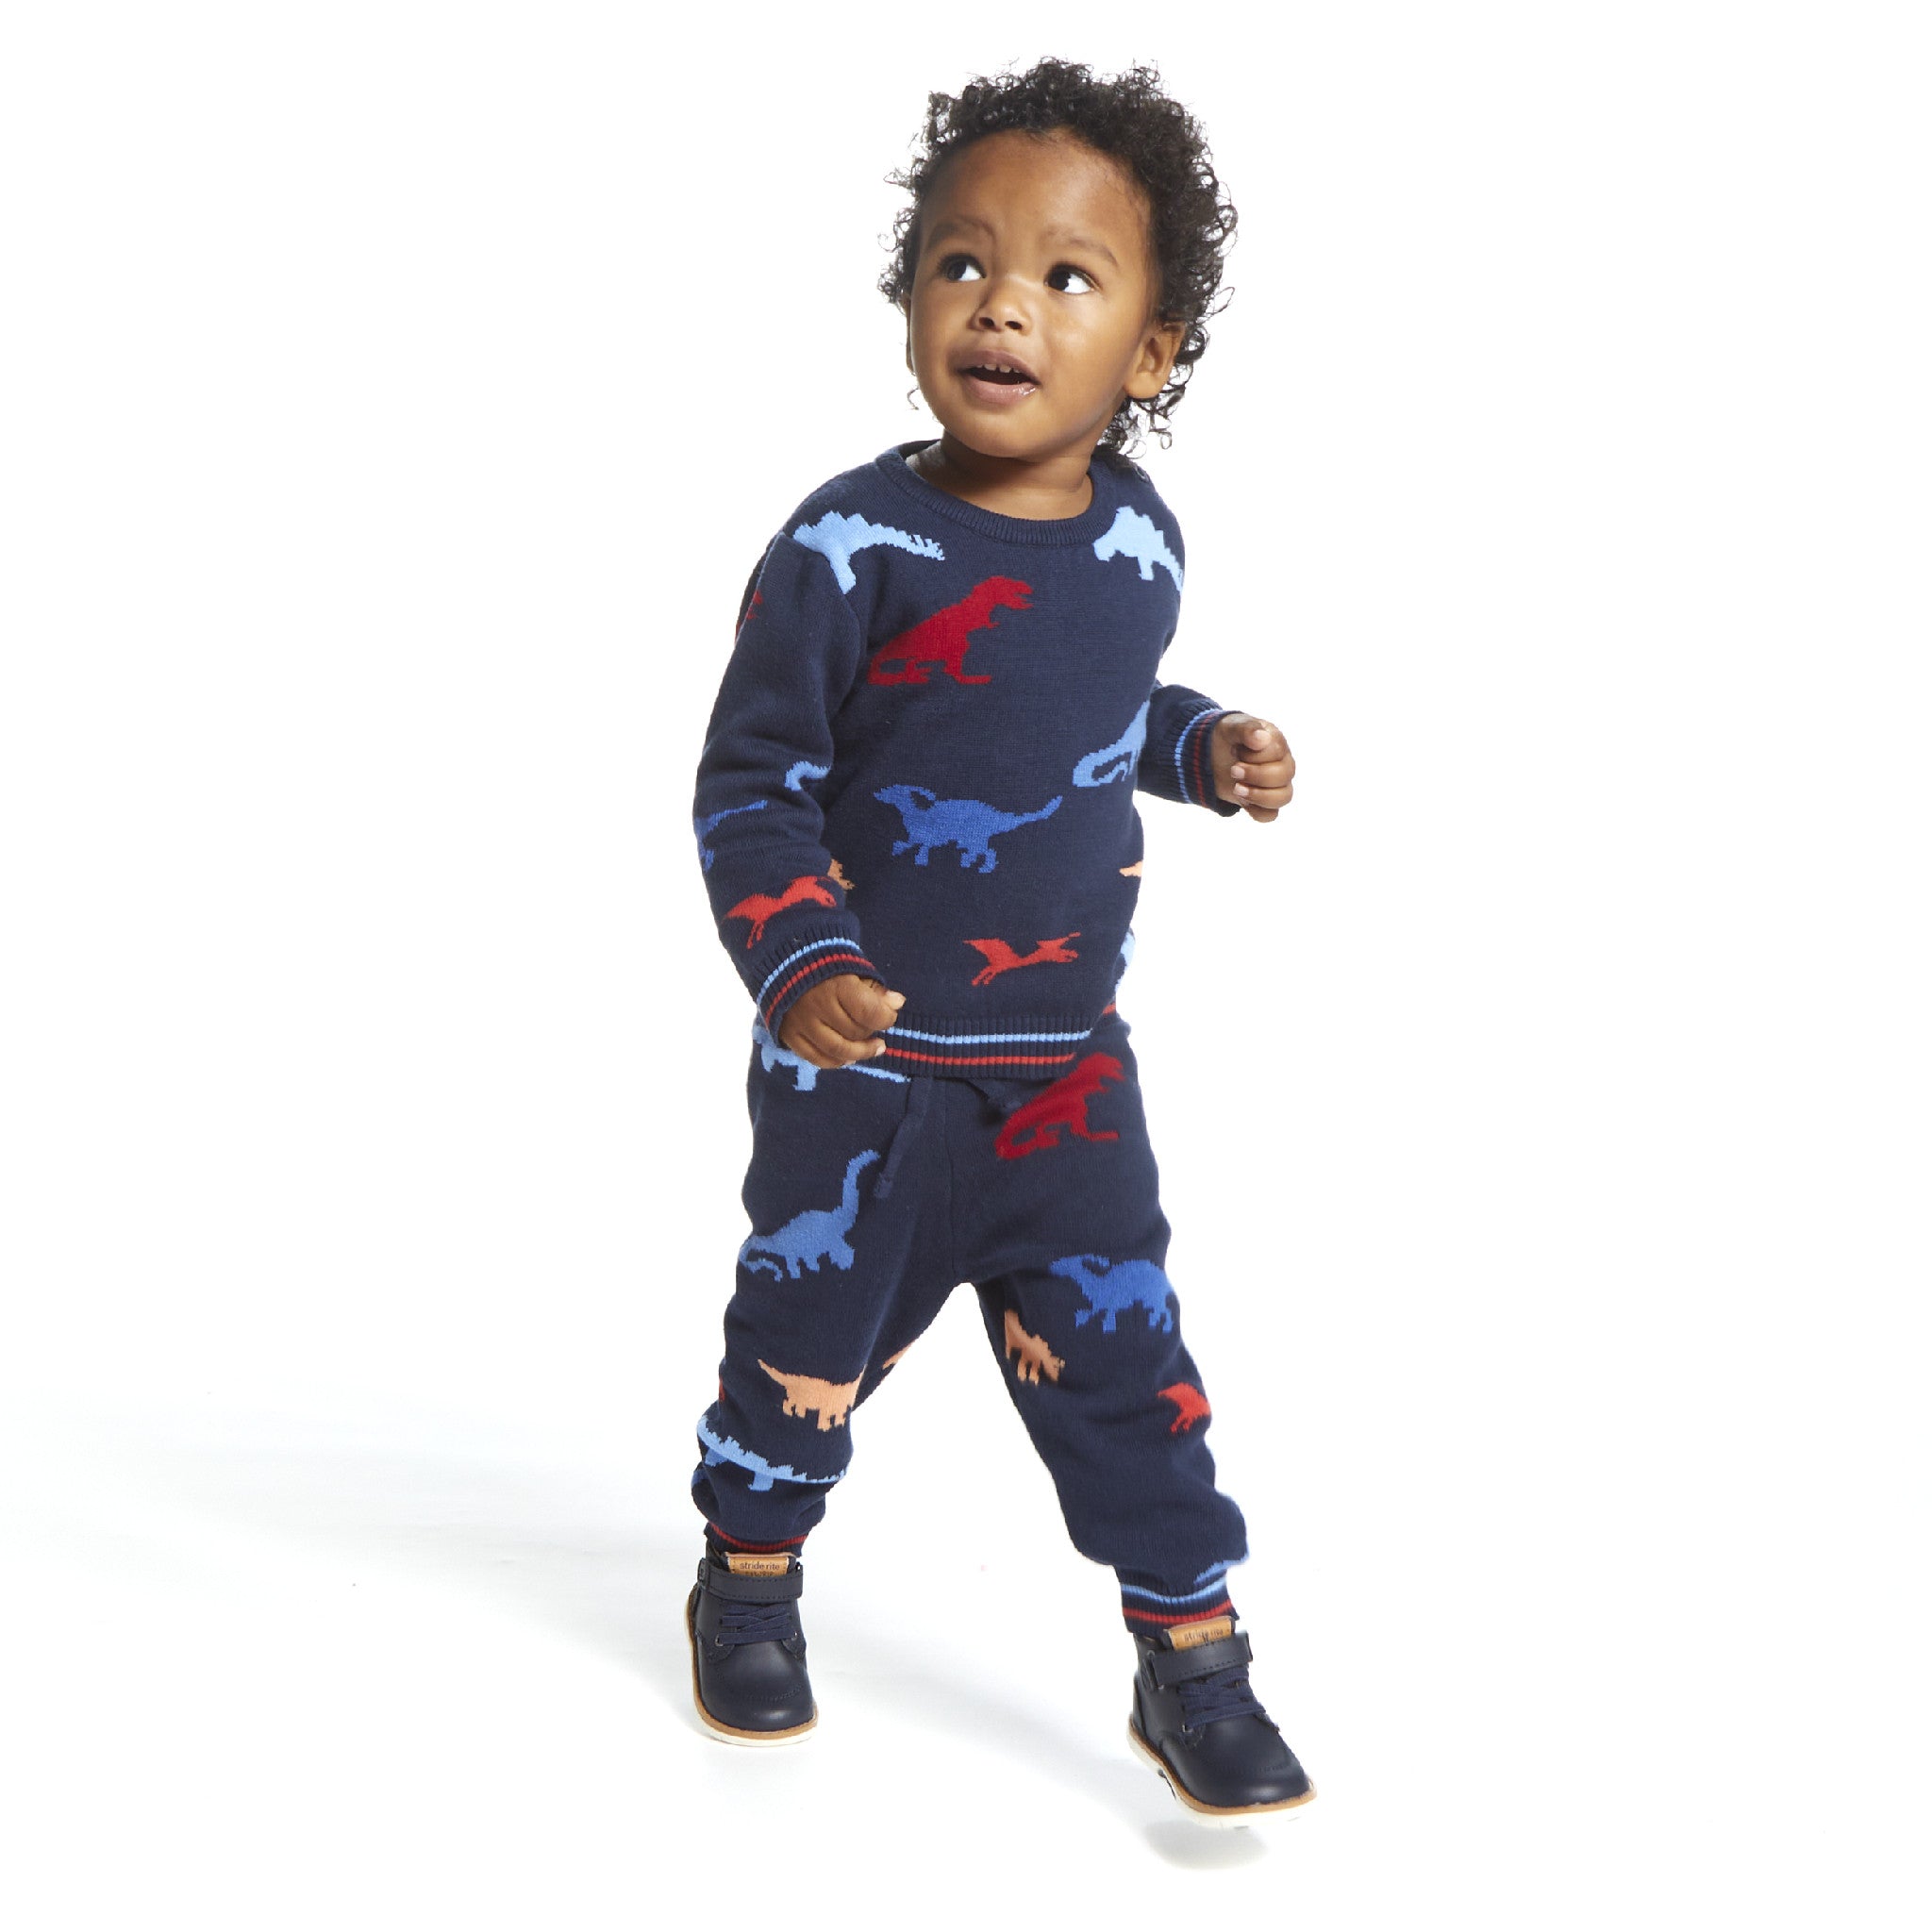 Andy & Evan baby boy Dinosaur Pattern Sweater Set - Navy - Little Birdies